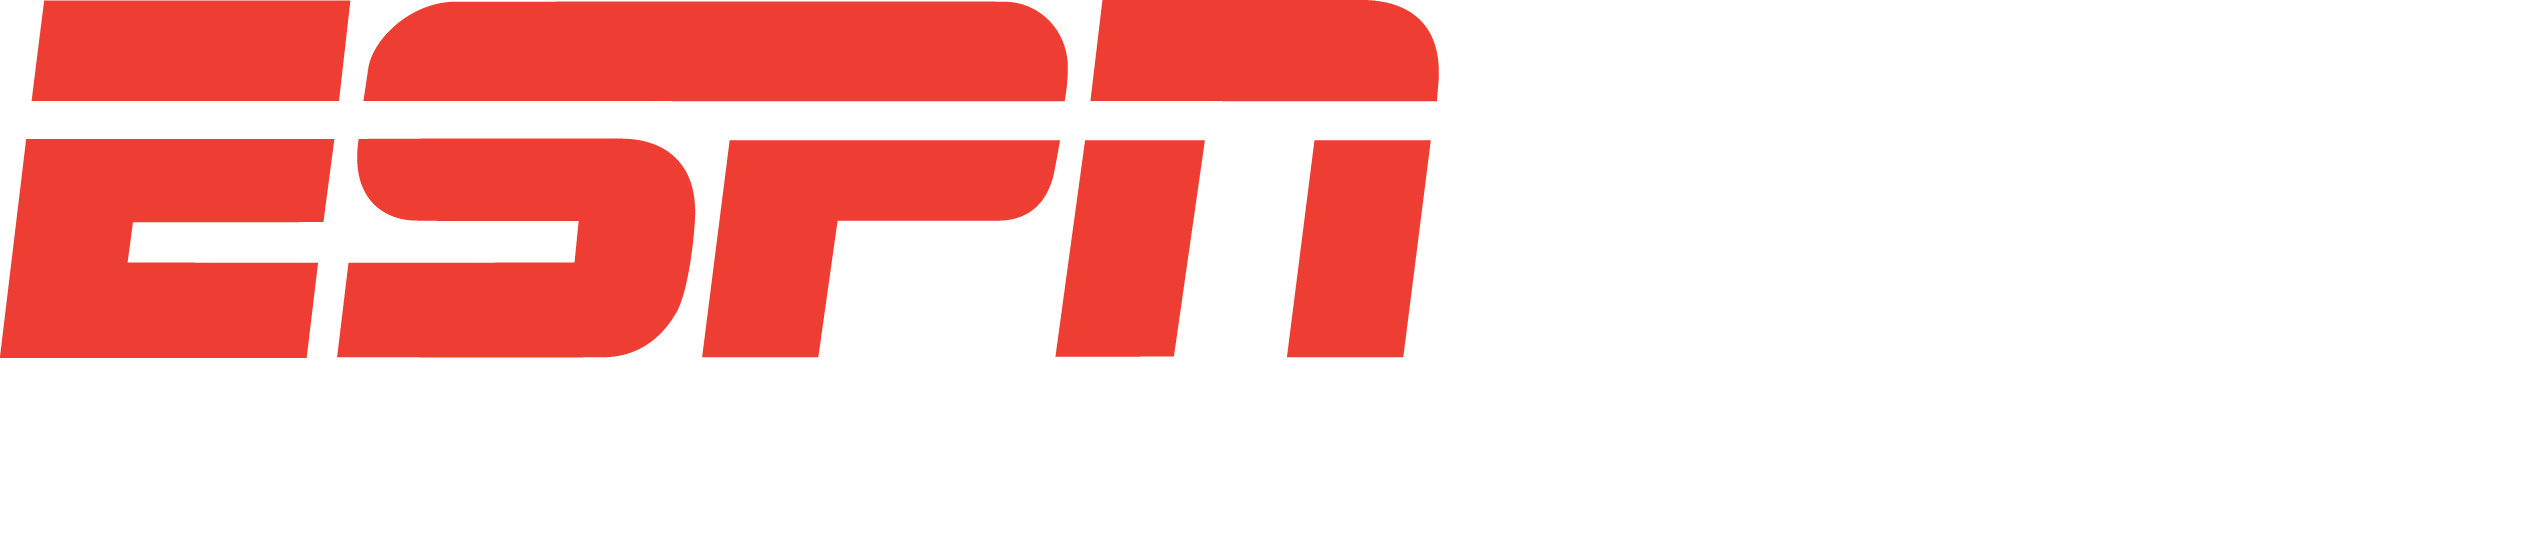 Espn Png Logo.